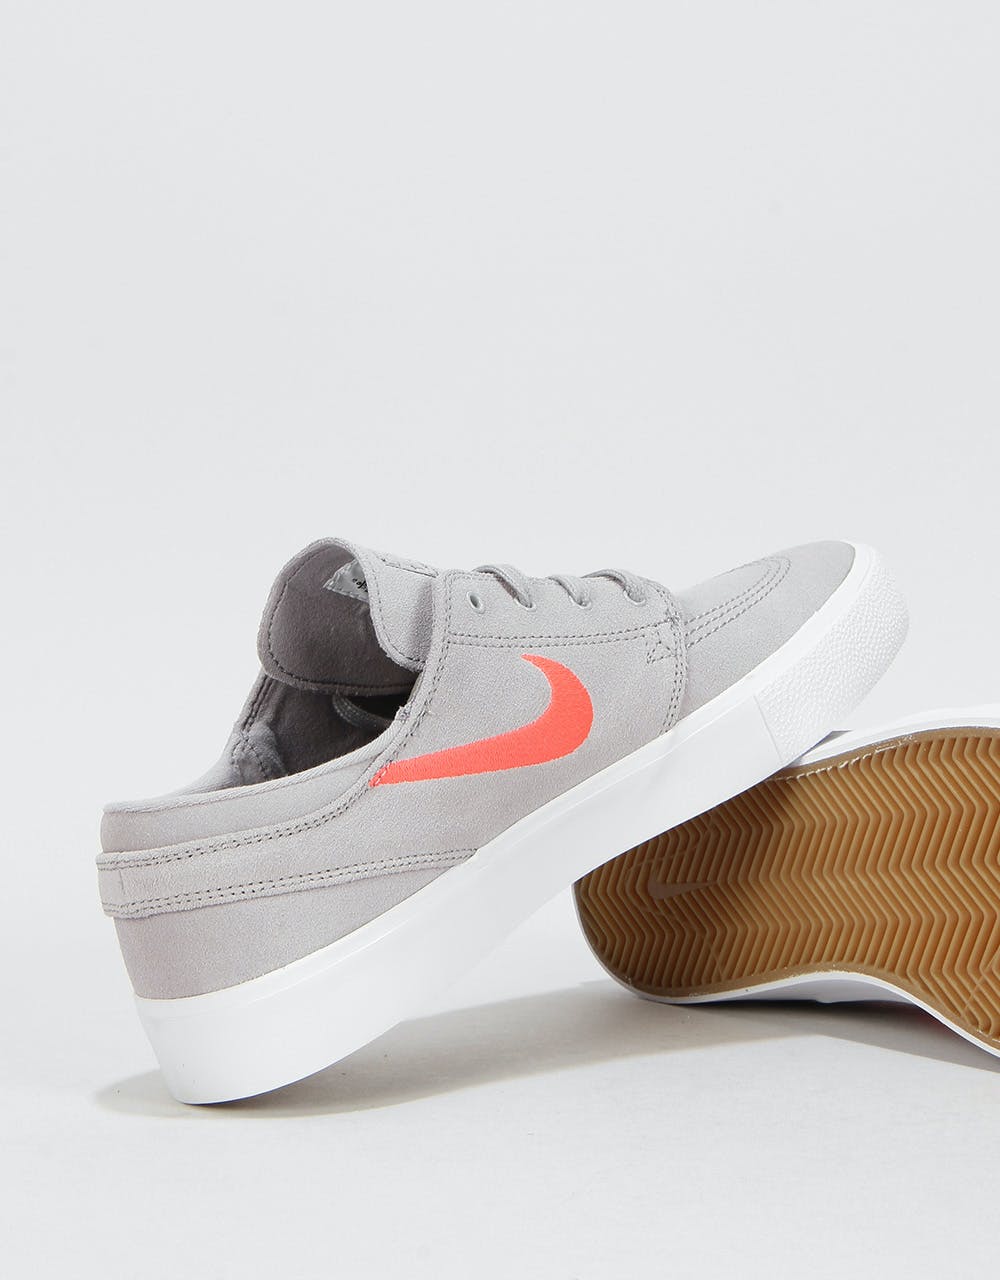 Nike SB Zoom Janoski RM Skate Shoes - Atmosphere Grey/Crimson-White